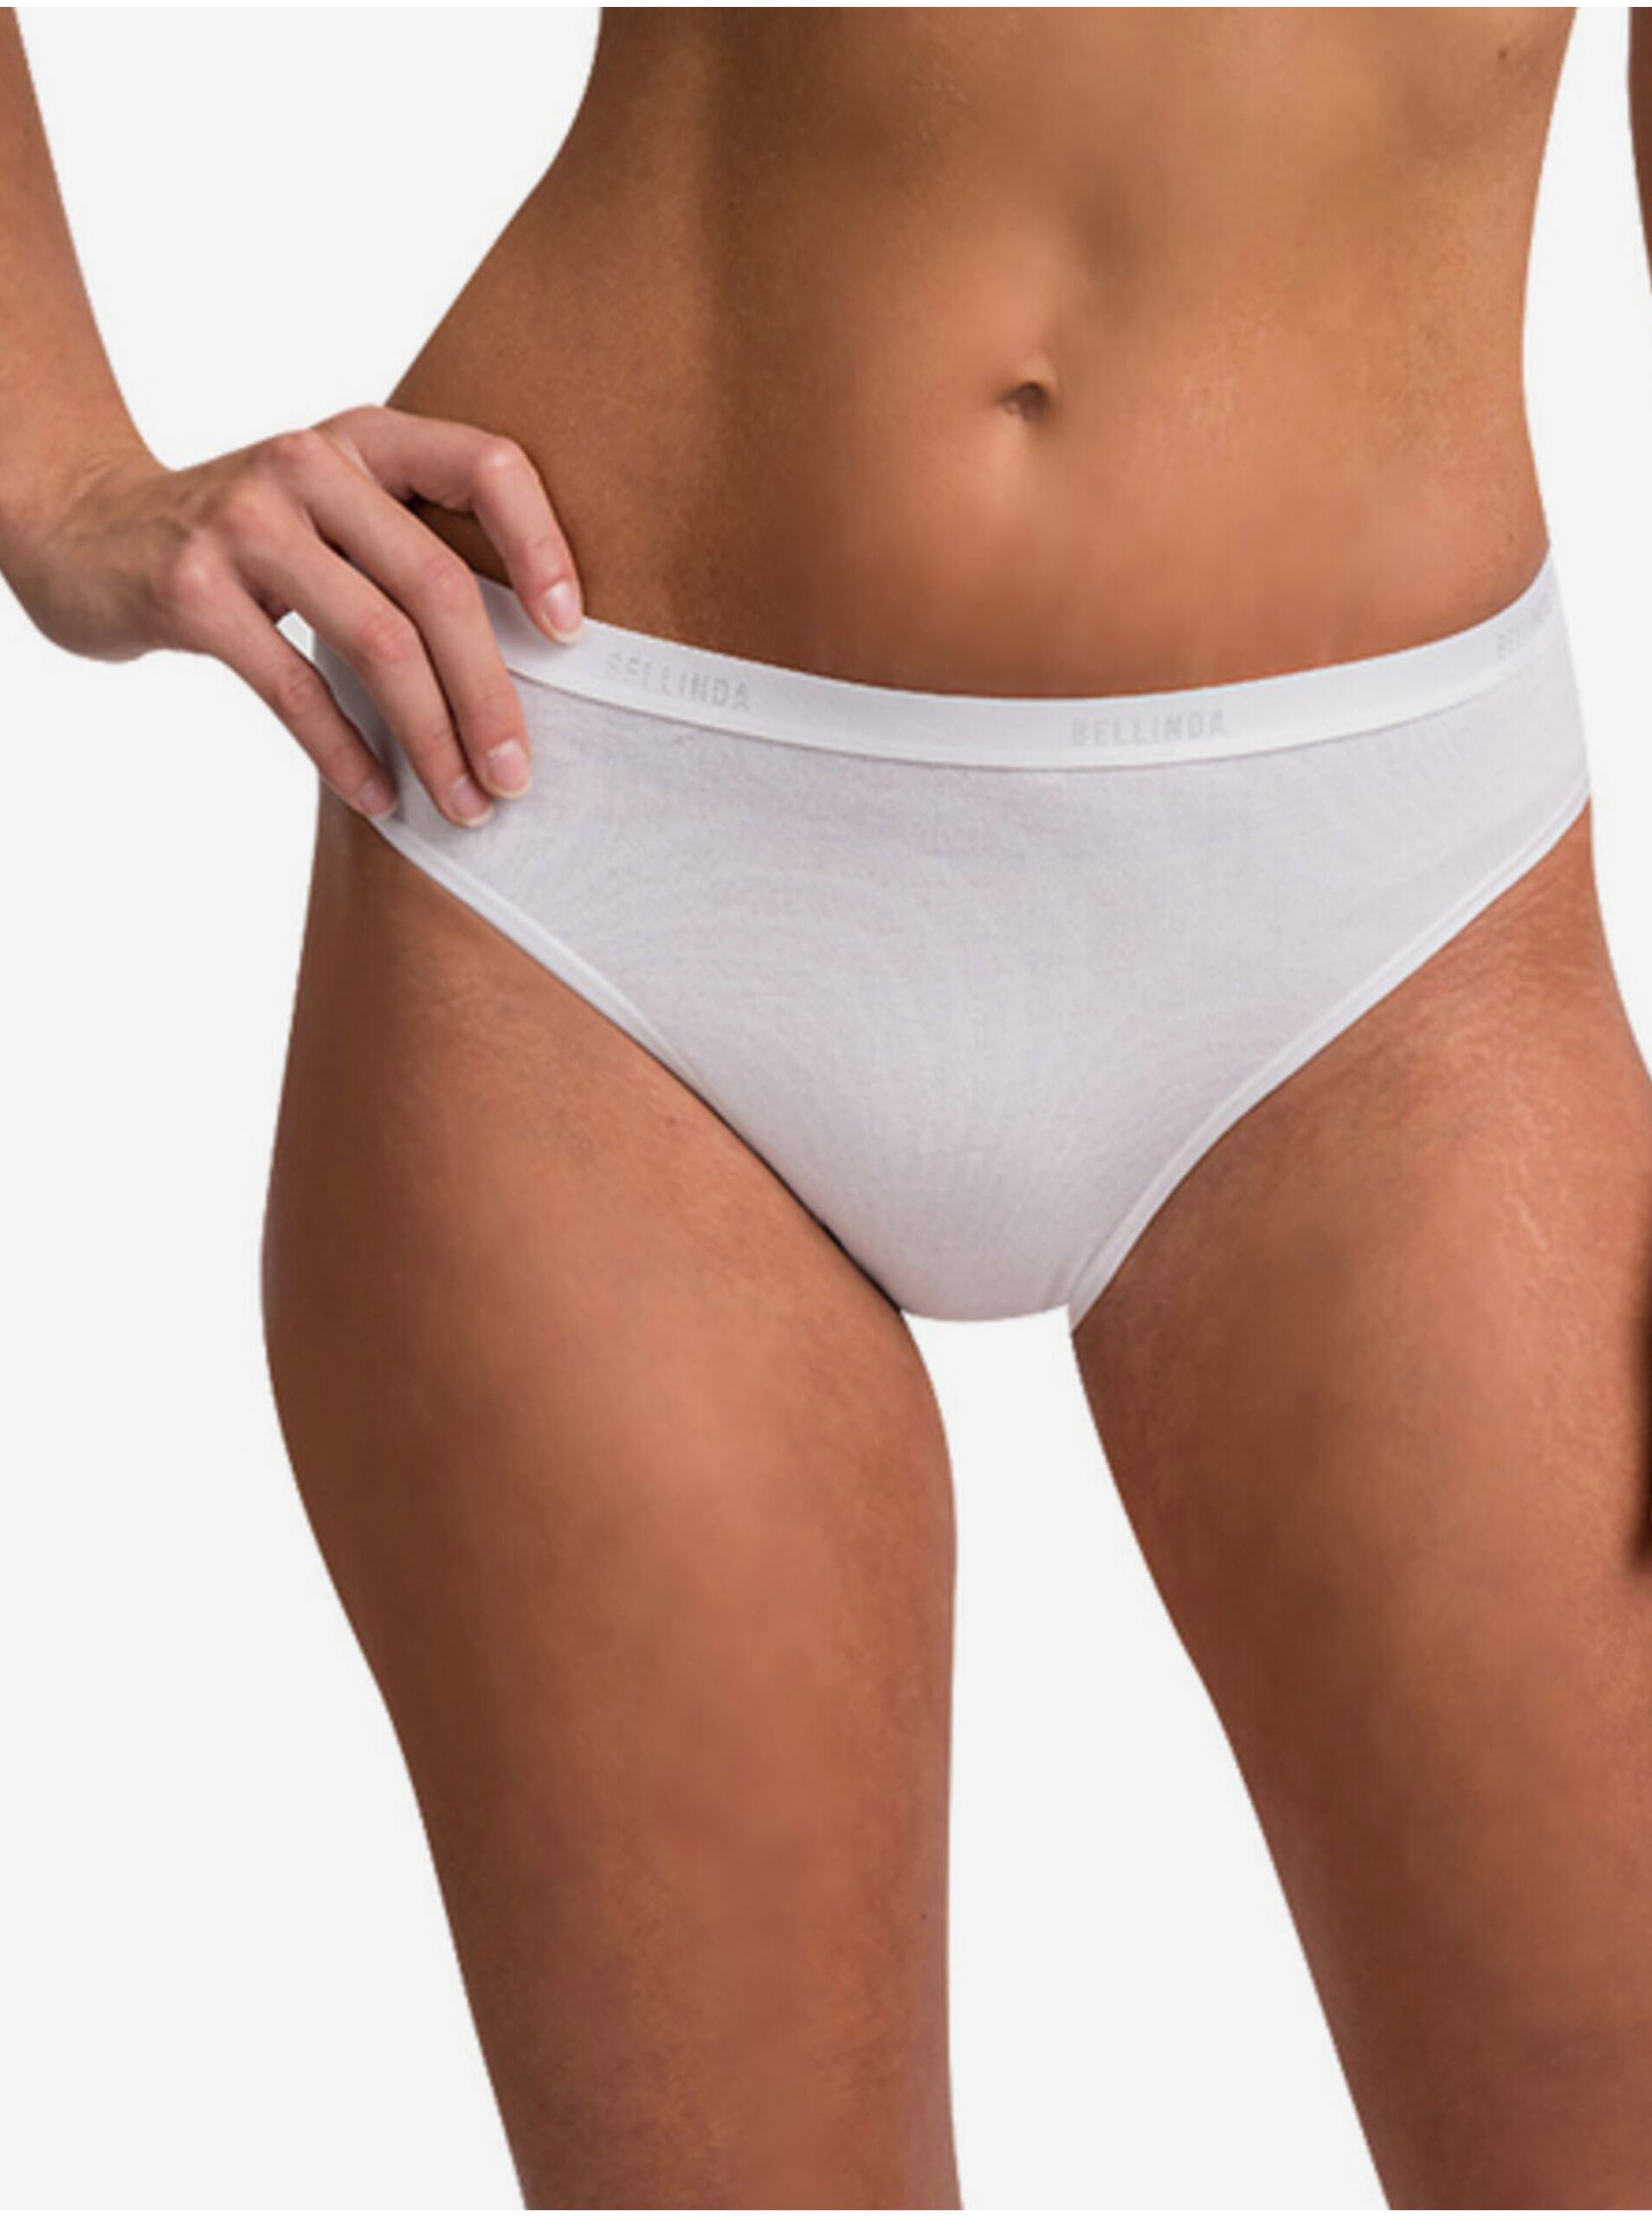 E-shop Biele dámske nohavičky Bellinda Cotton Minislip